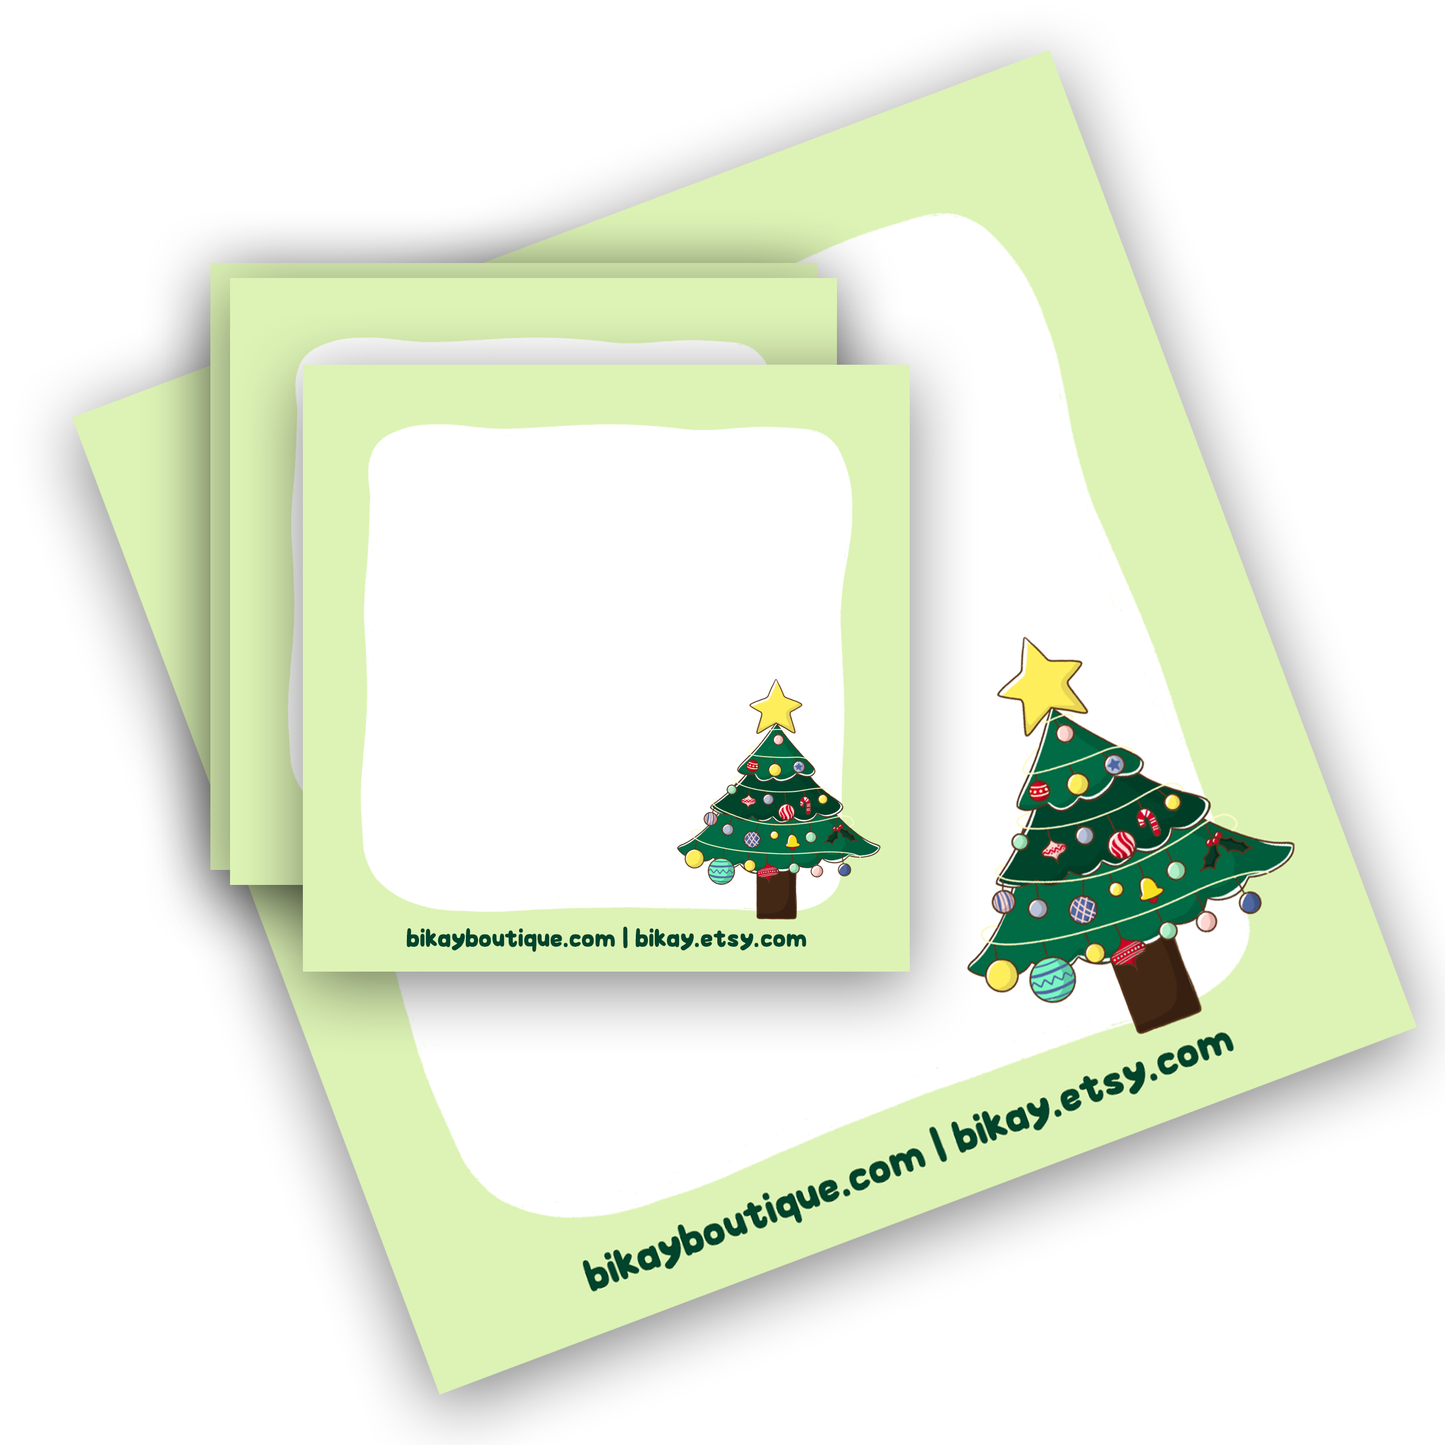 Oh Christmas Tree Note Pad 3.5"x3.5"